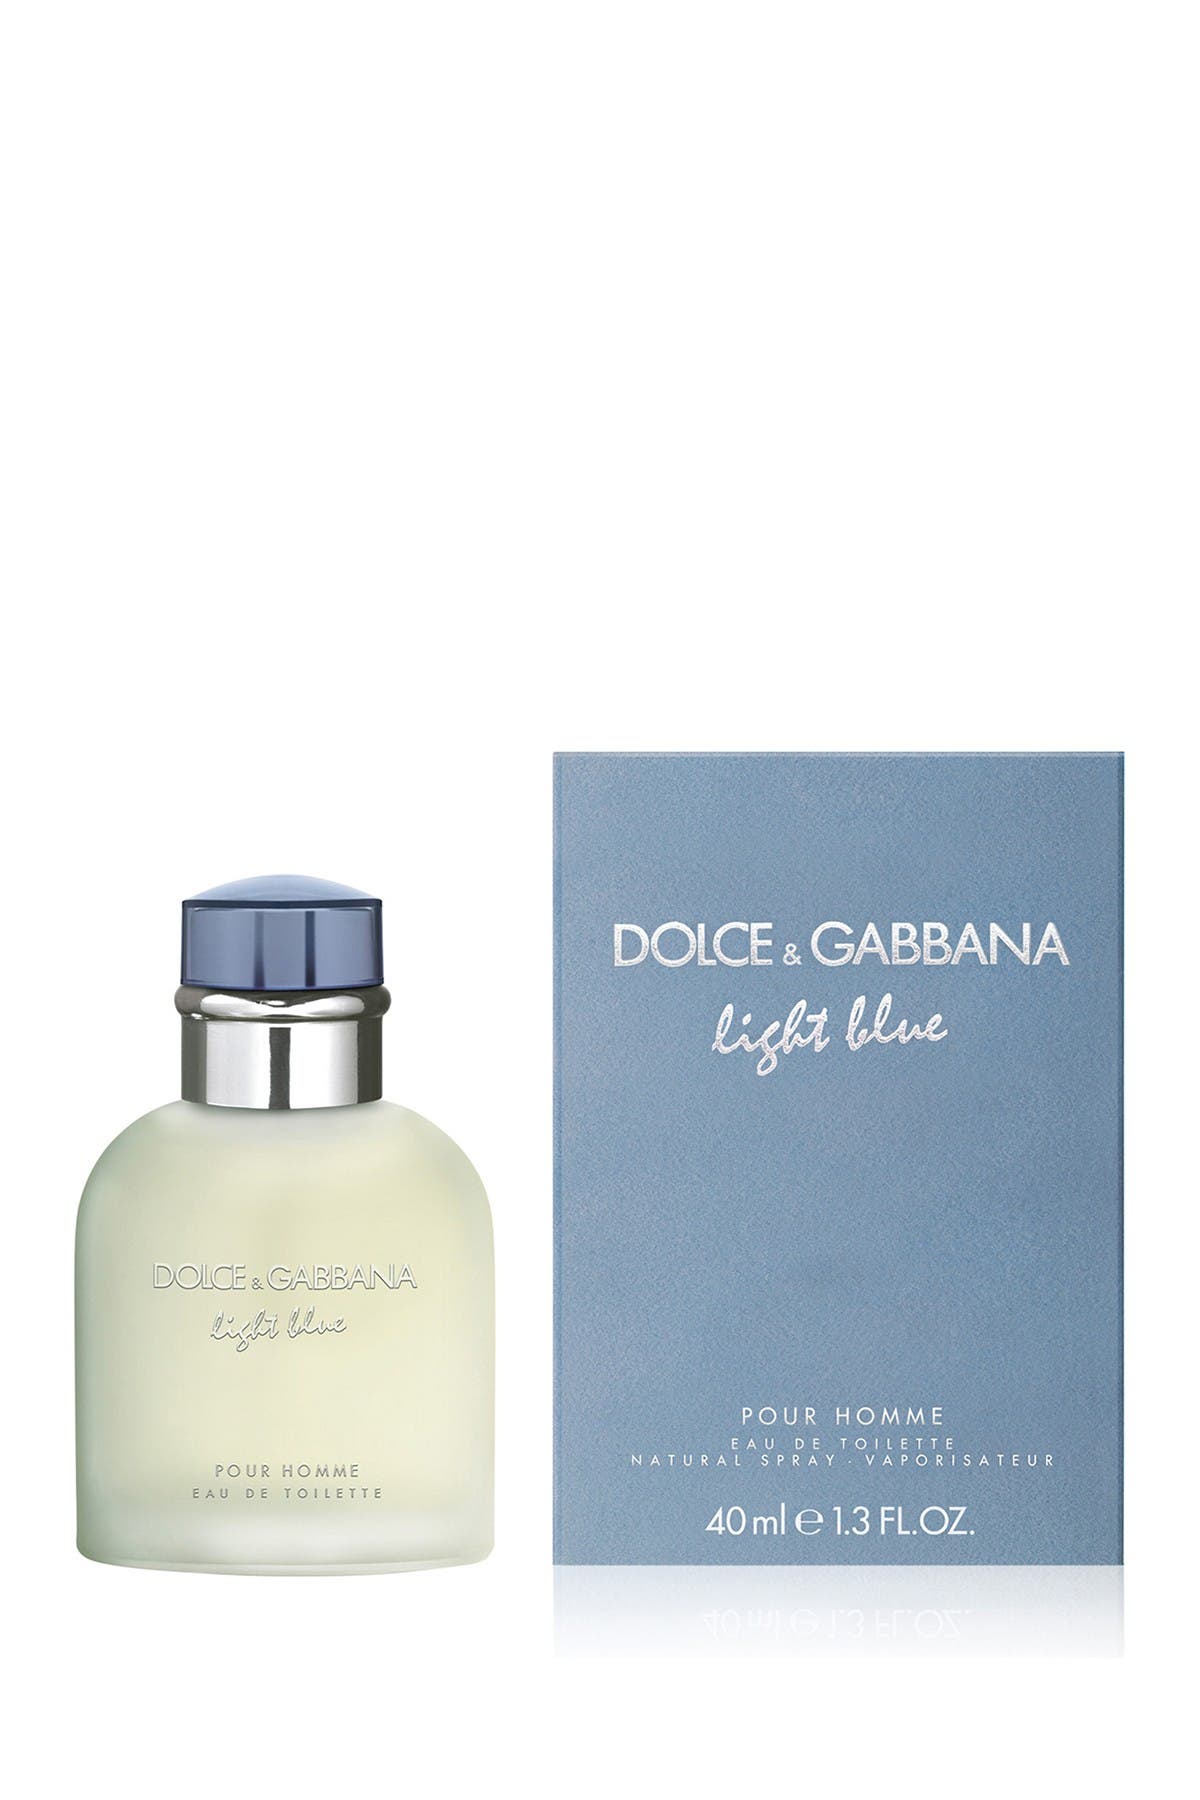 dolce gabbana light blue for him